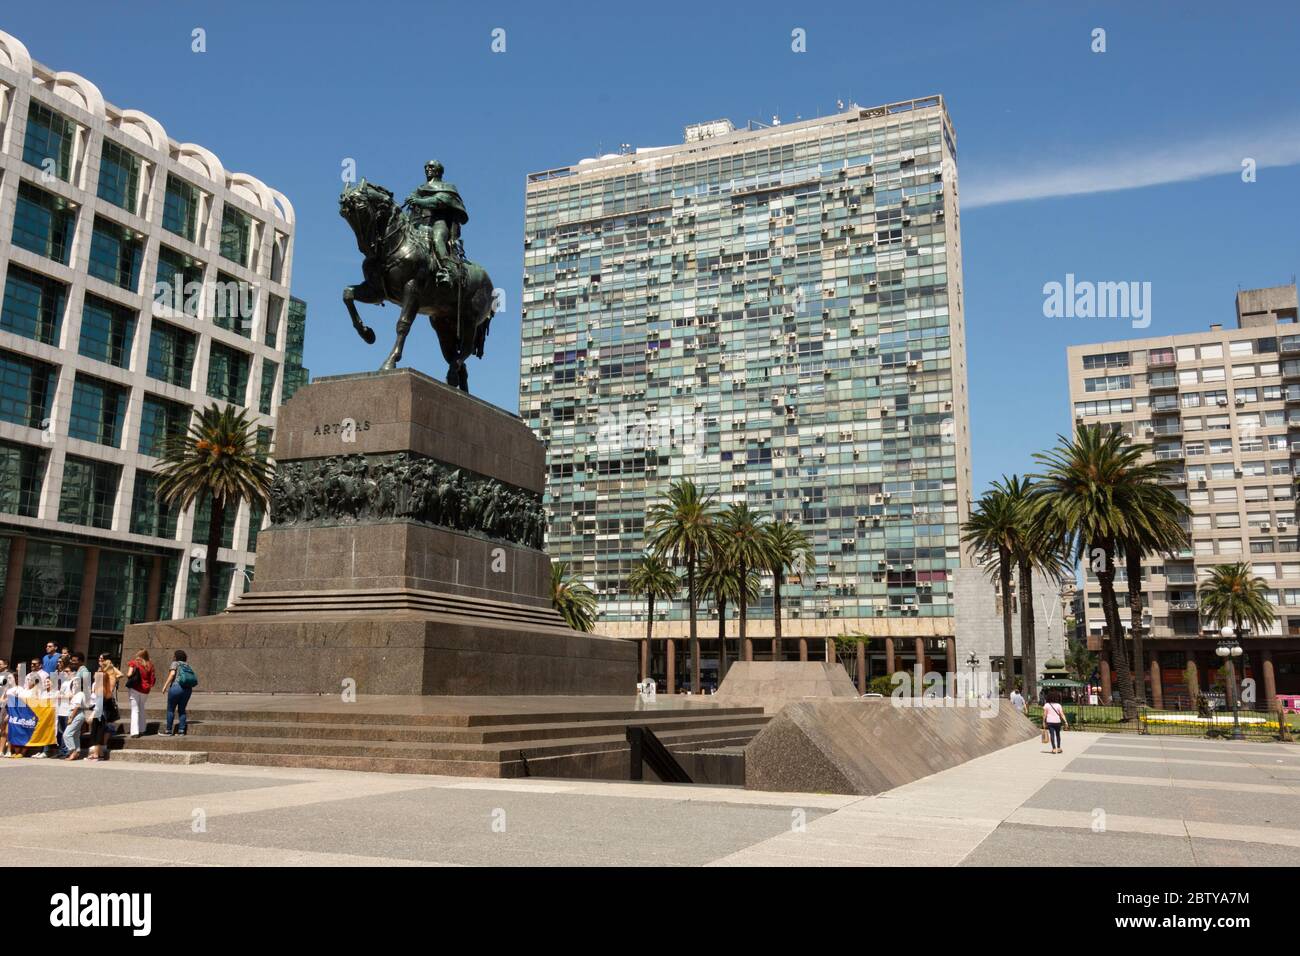 Statue of Jose Artigas above his mausoleum, Plaza Independencia, Montevideo (Ciudad Viejo), Uruguay, South America Stock Photo